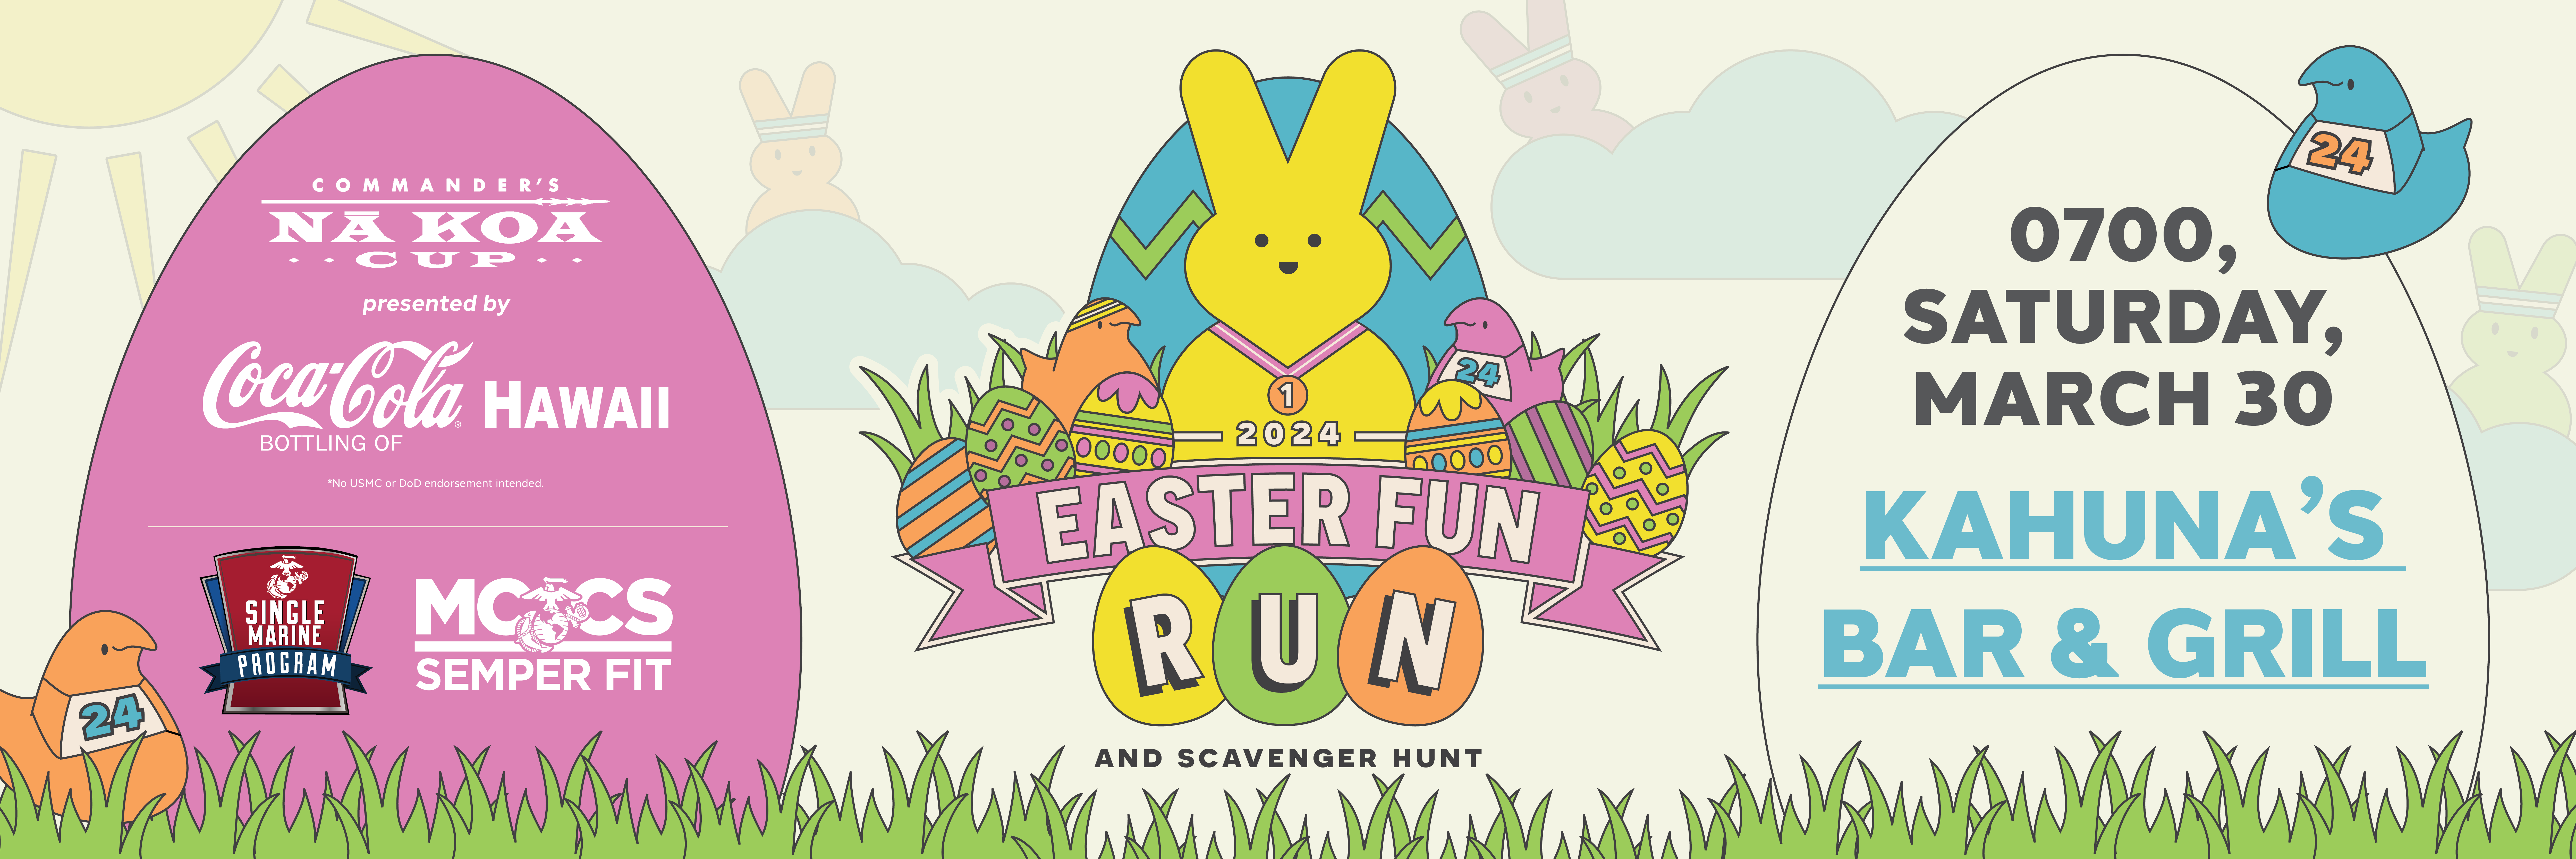 Easter Fun Run & Scavenger Hunt